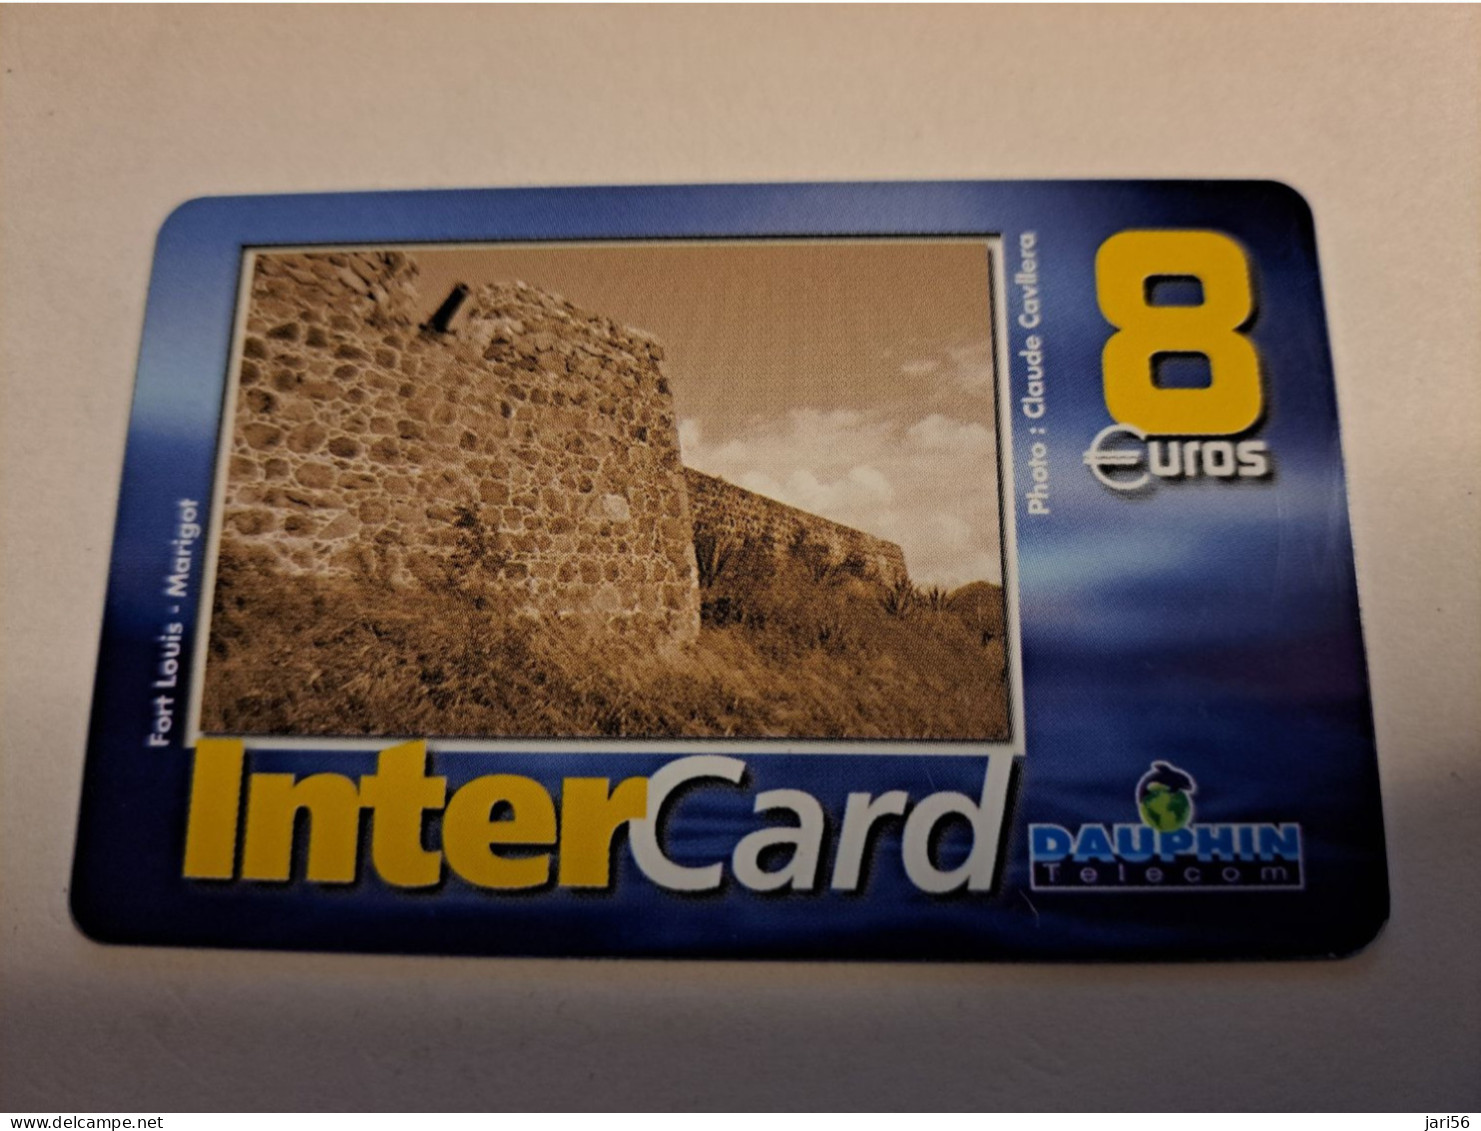 ST MARTIN / INTERCARD  8 EURO  FORT LOUIS MARIGOT          NO 087   Fine Used Card    ** 16105 ** - Antillen (Frans)